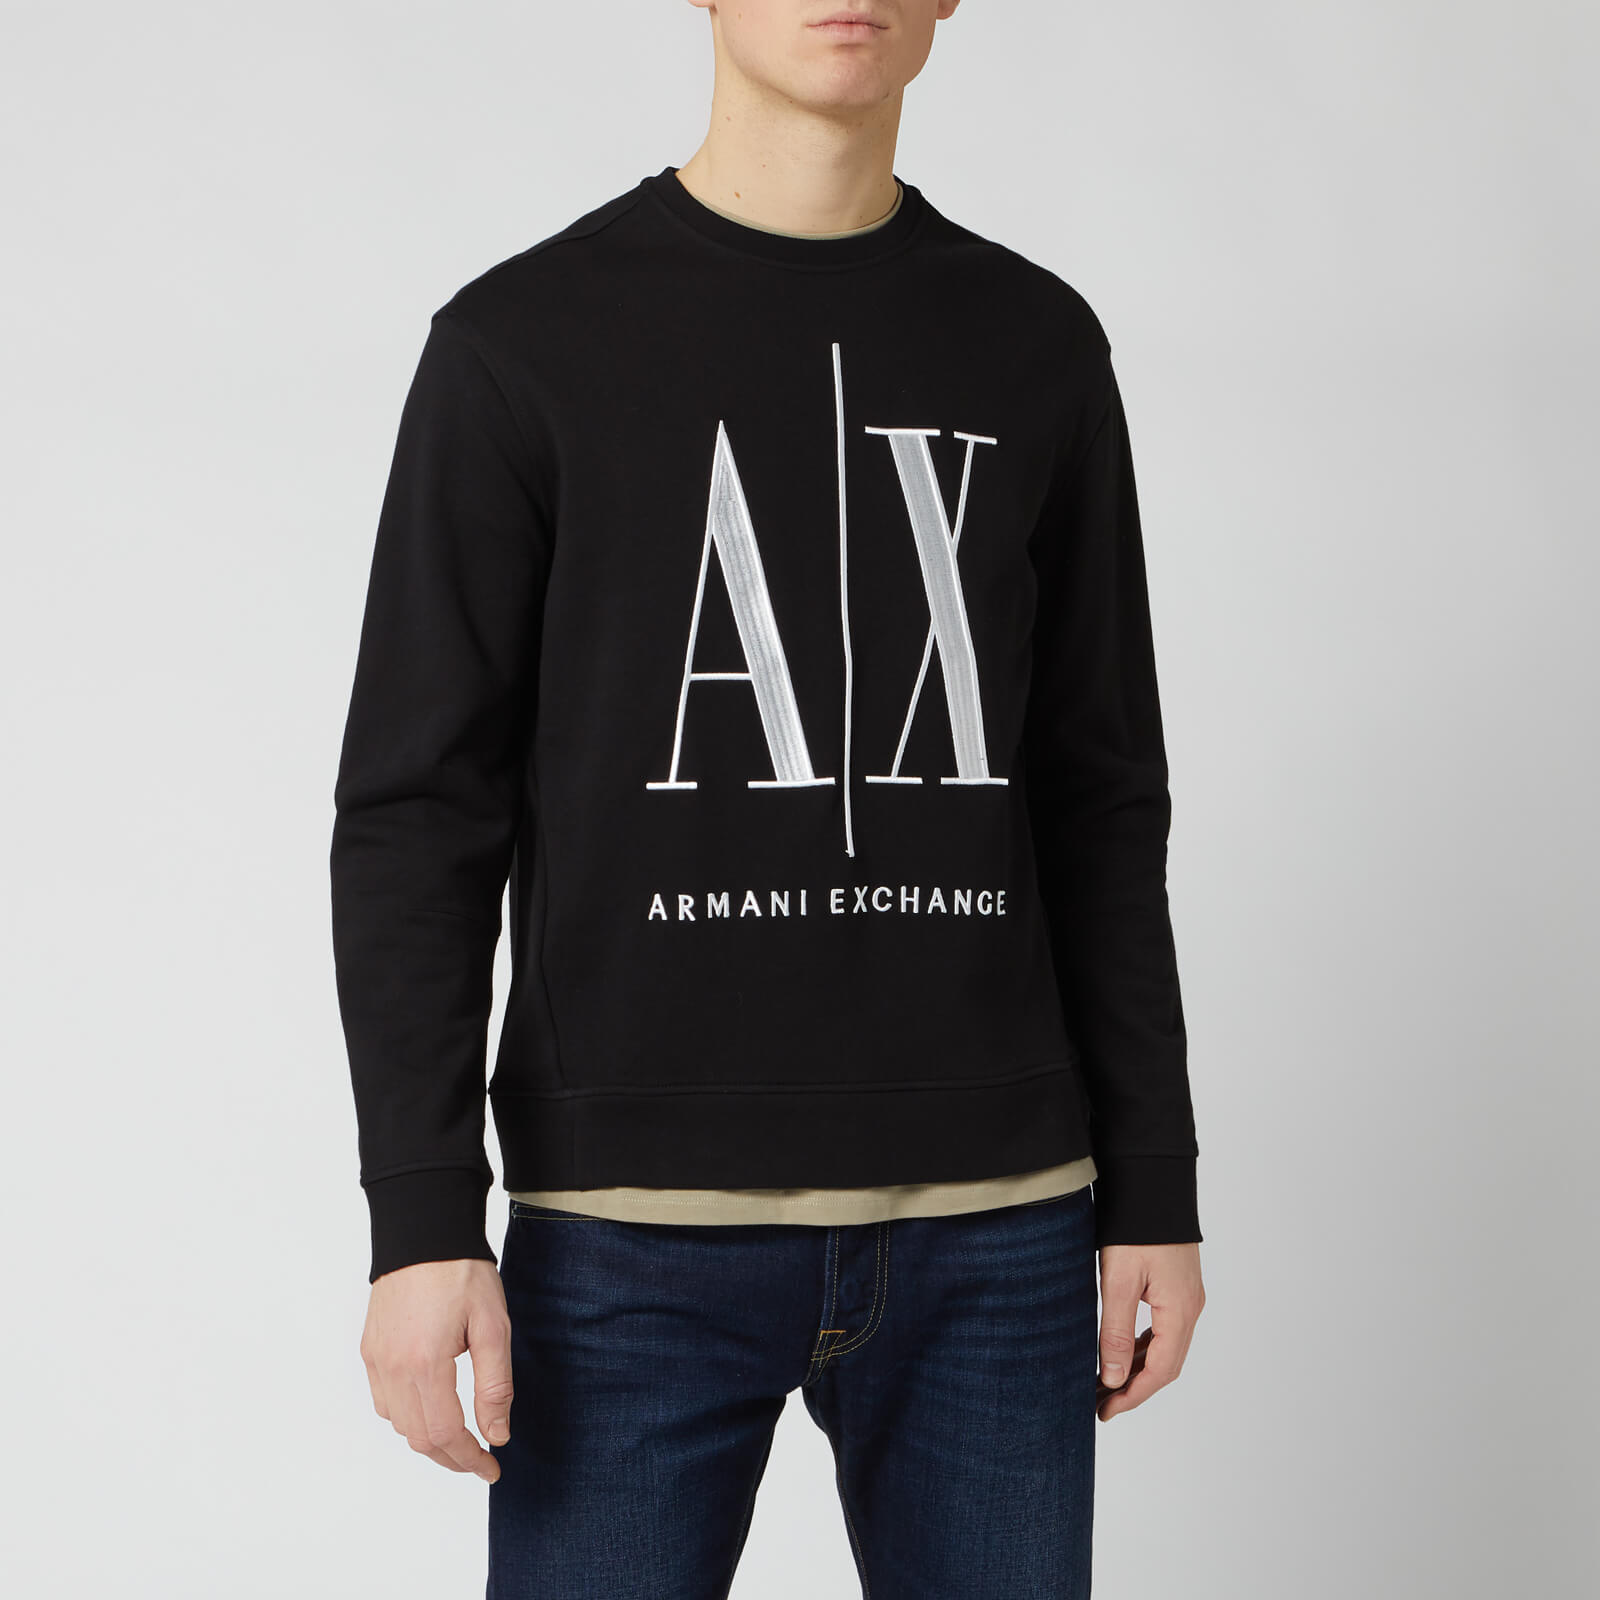 Armani Exchange Men's Big Ax Crewneck Sweatshirt - Black